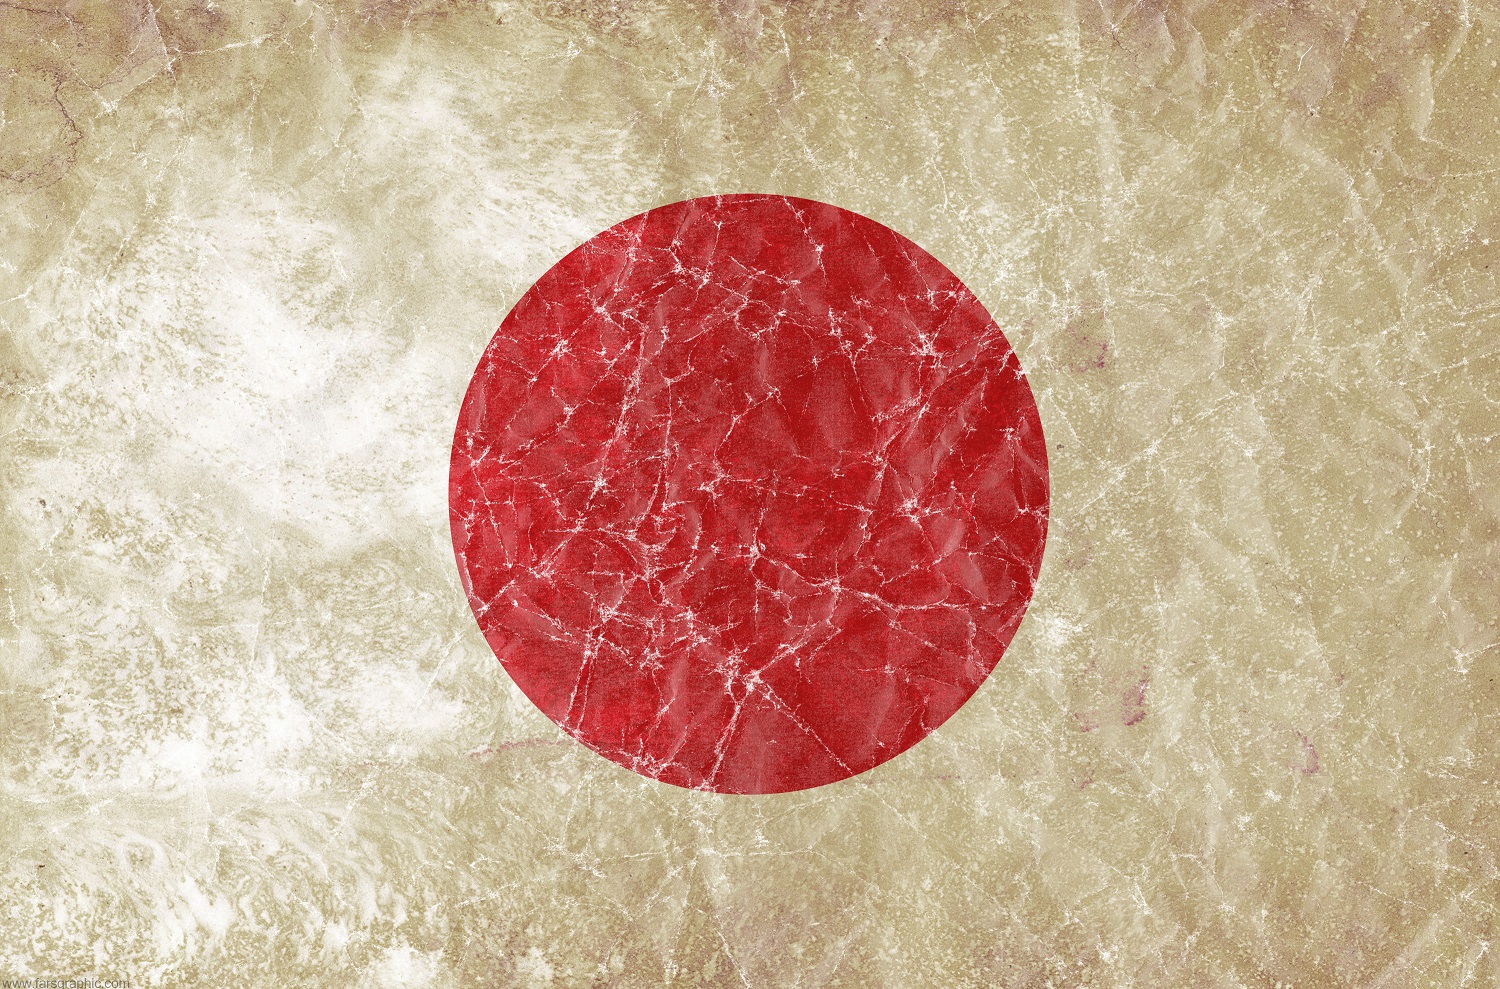 دانلود عکس پرچم کشور ژاپن